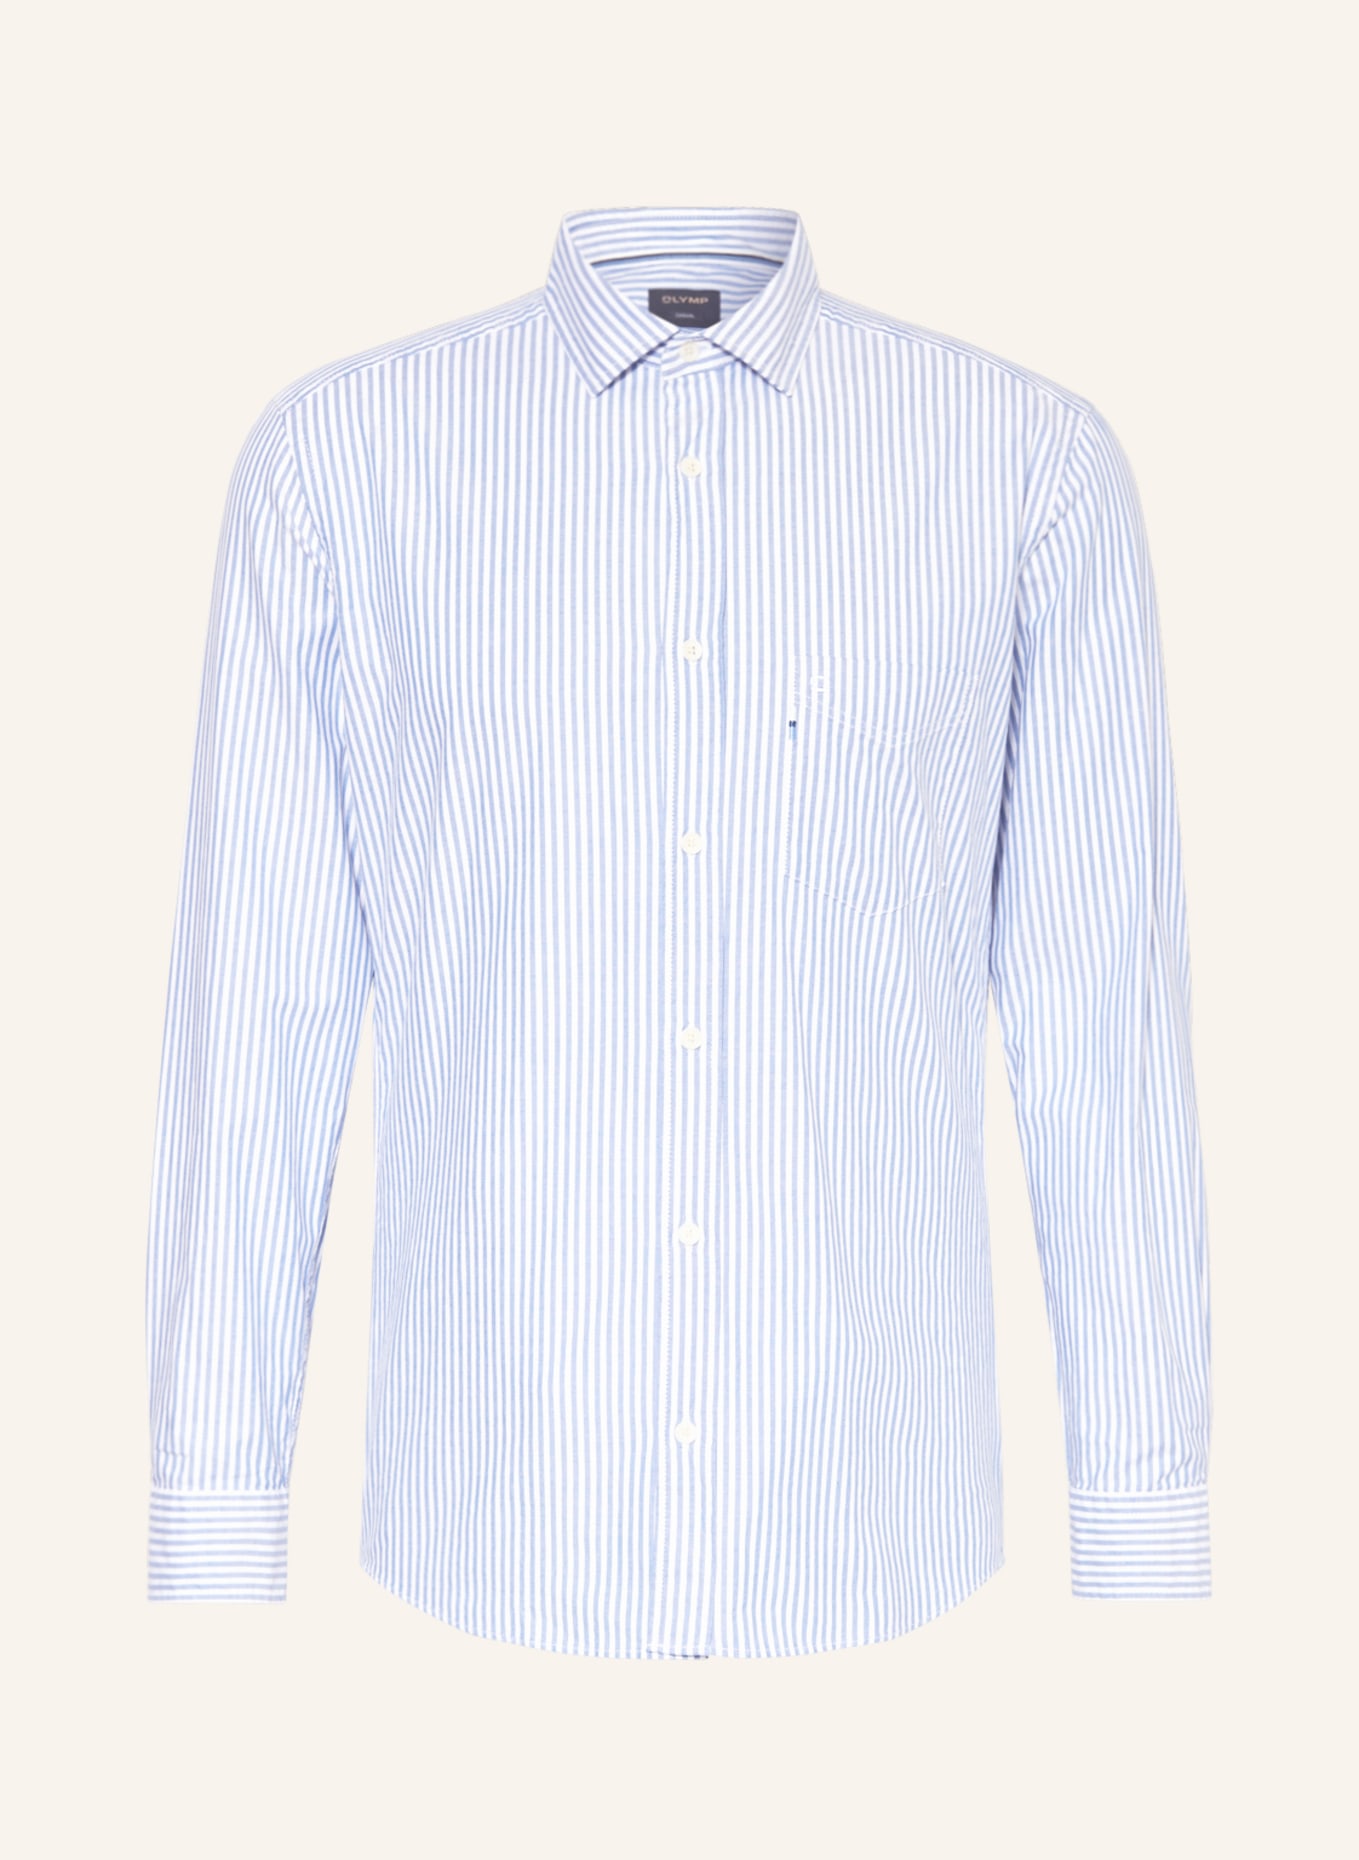 OLYMP Hemd regular fit, Farbe: WEISS/ BLAU (Bild 1)